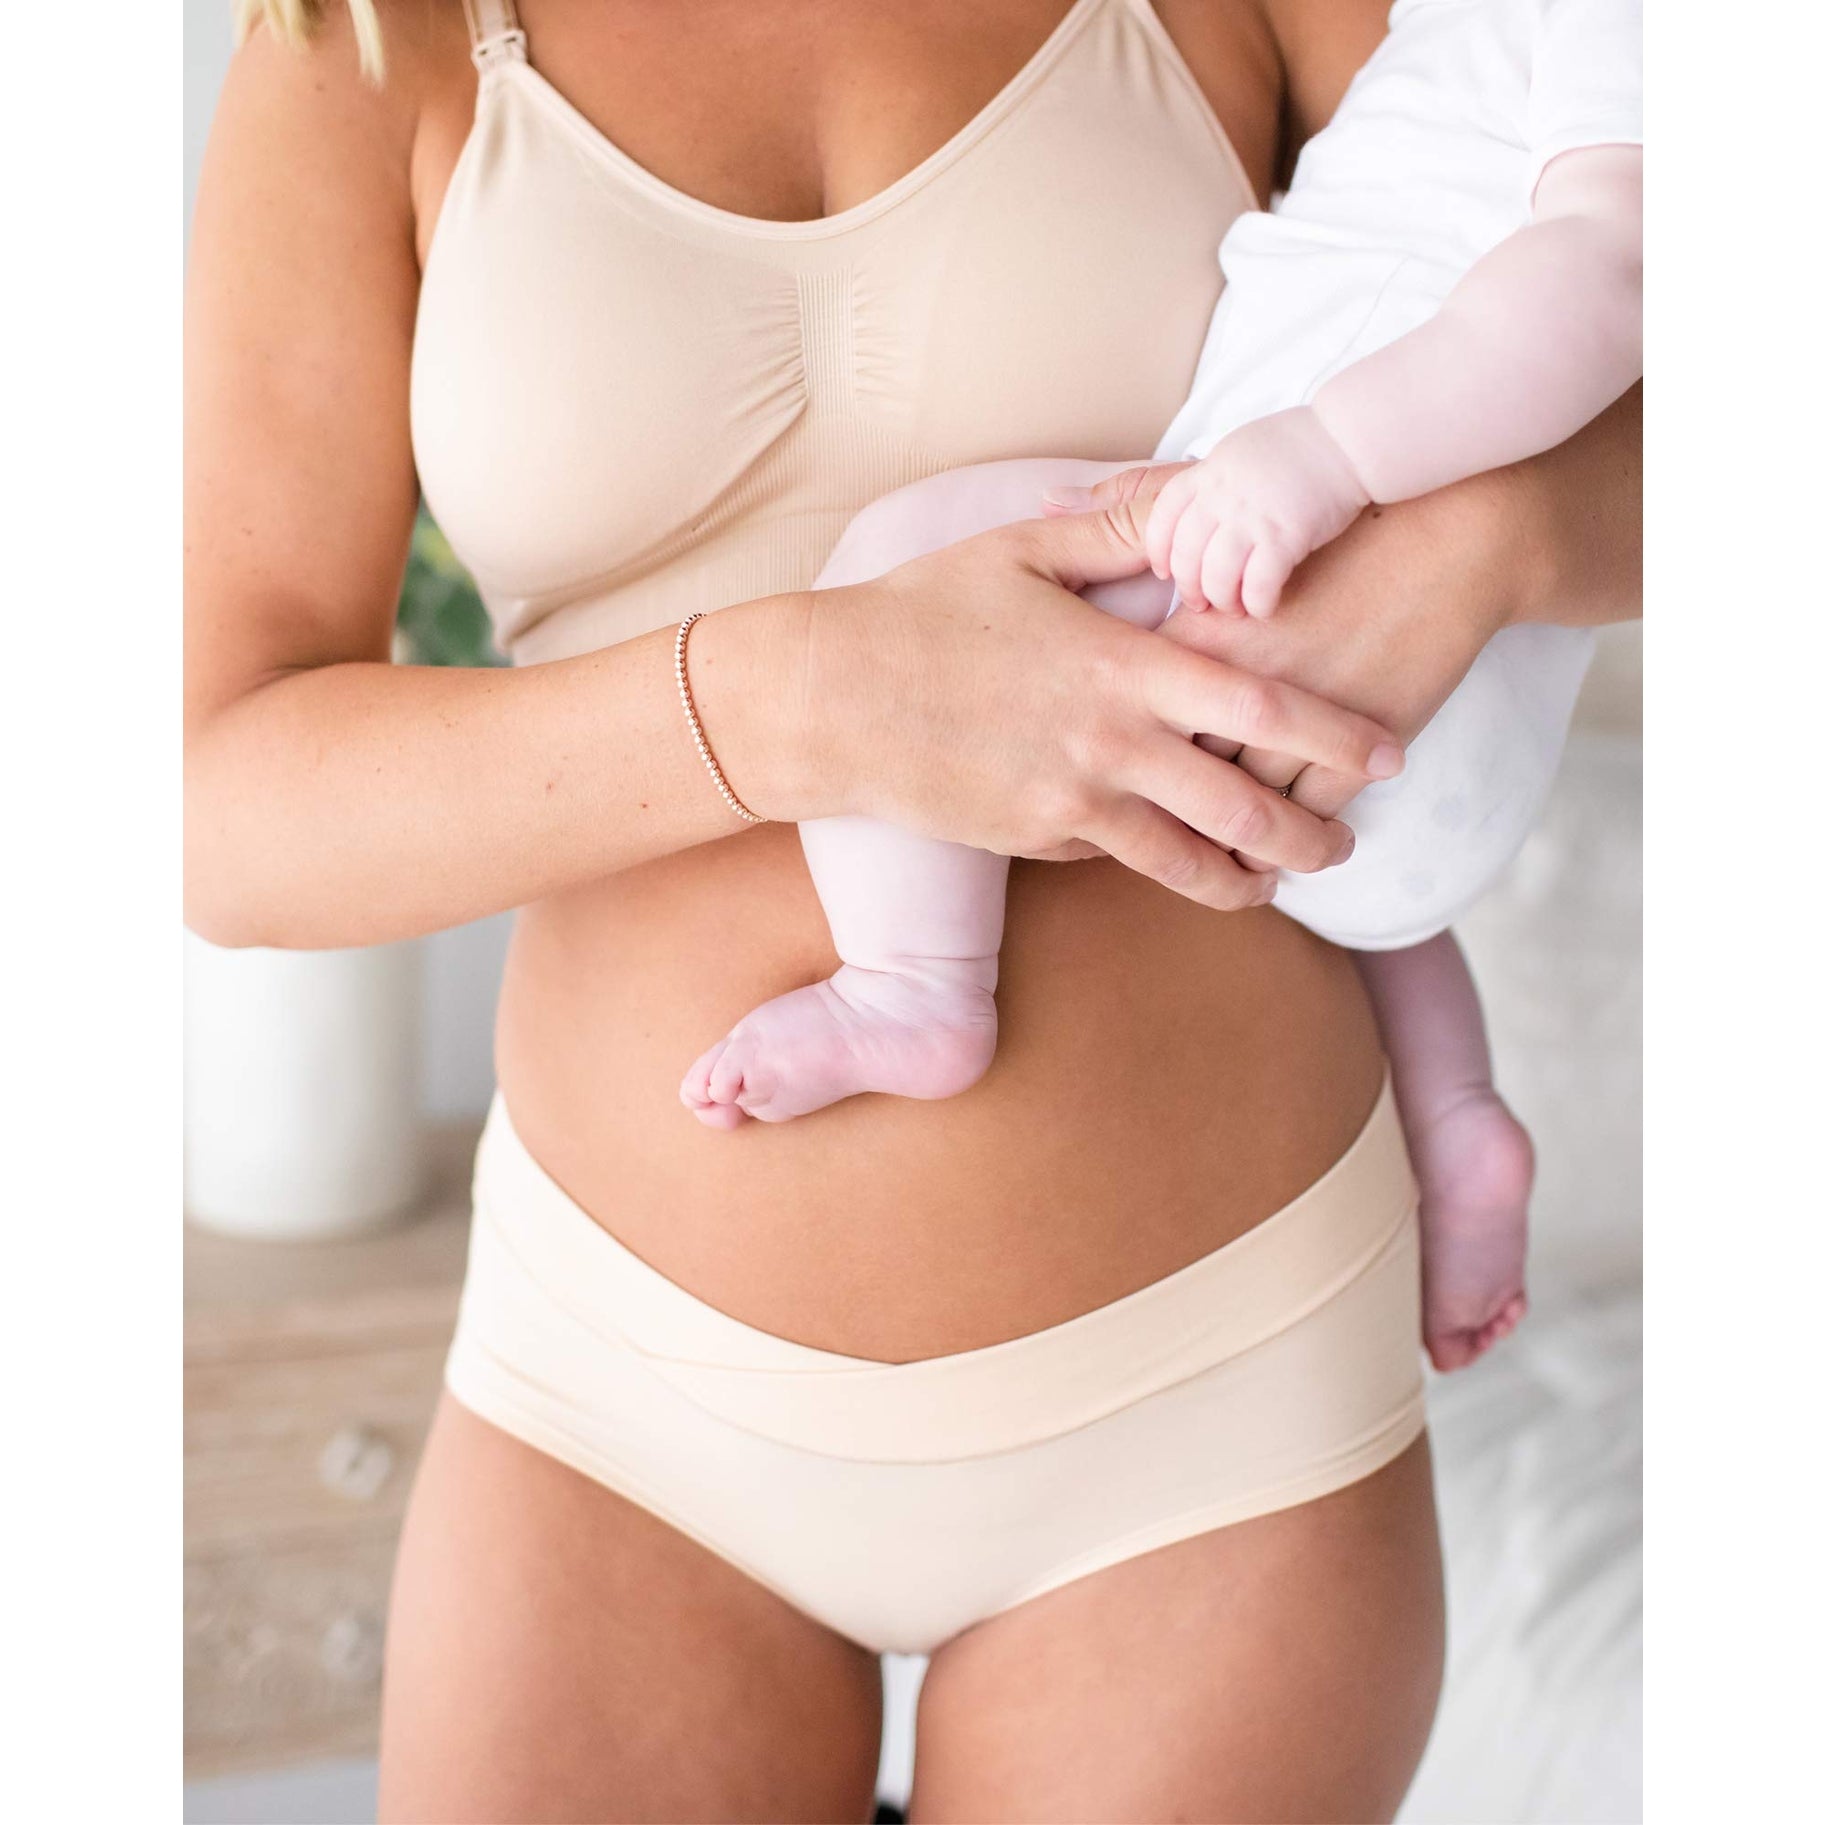 Motherhood Maternity Maternity Fold Over Panties (3 Pack) 